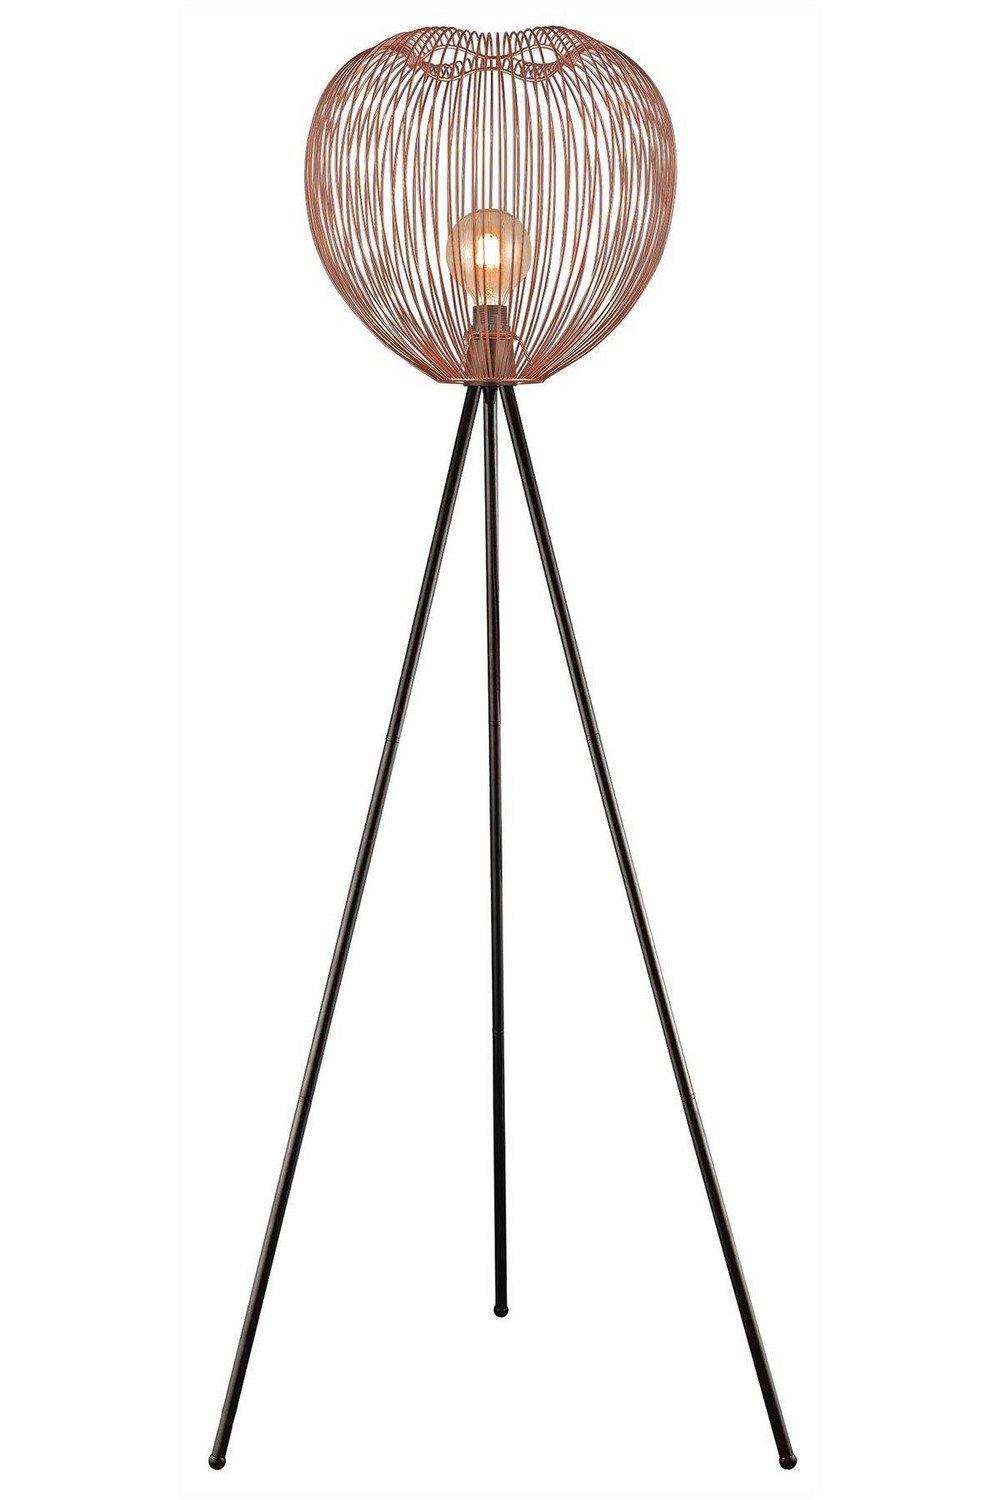 Spring Floor Lamp Copper E27